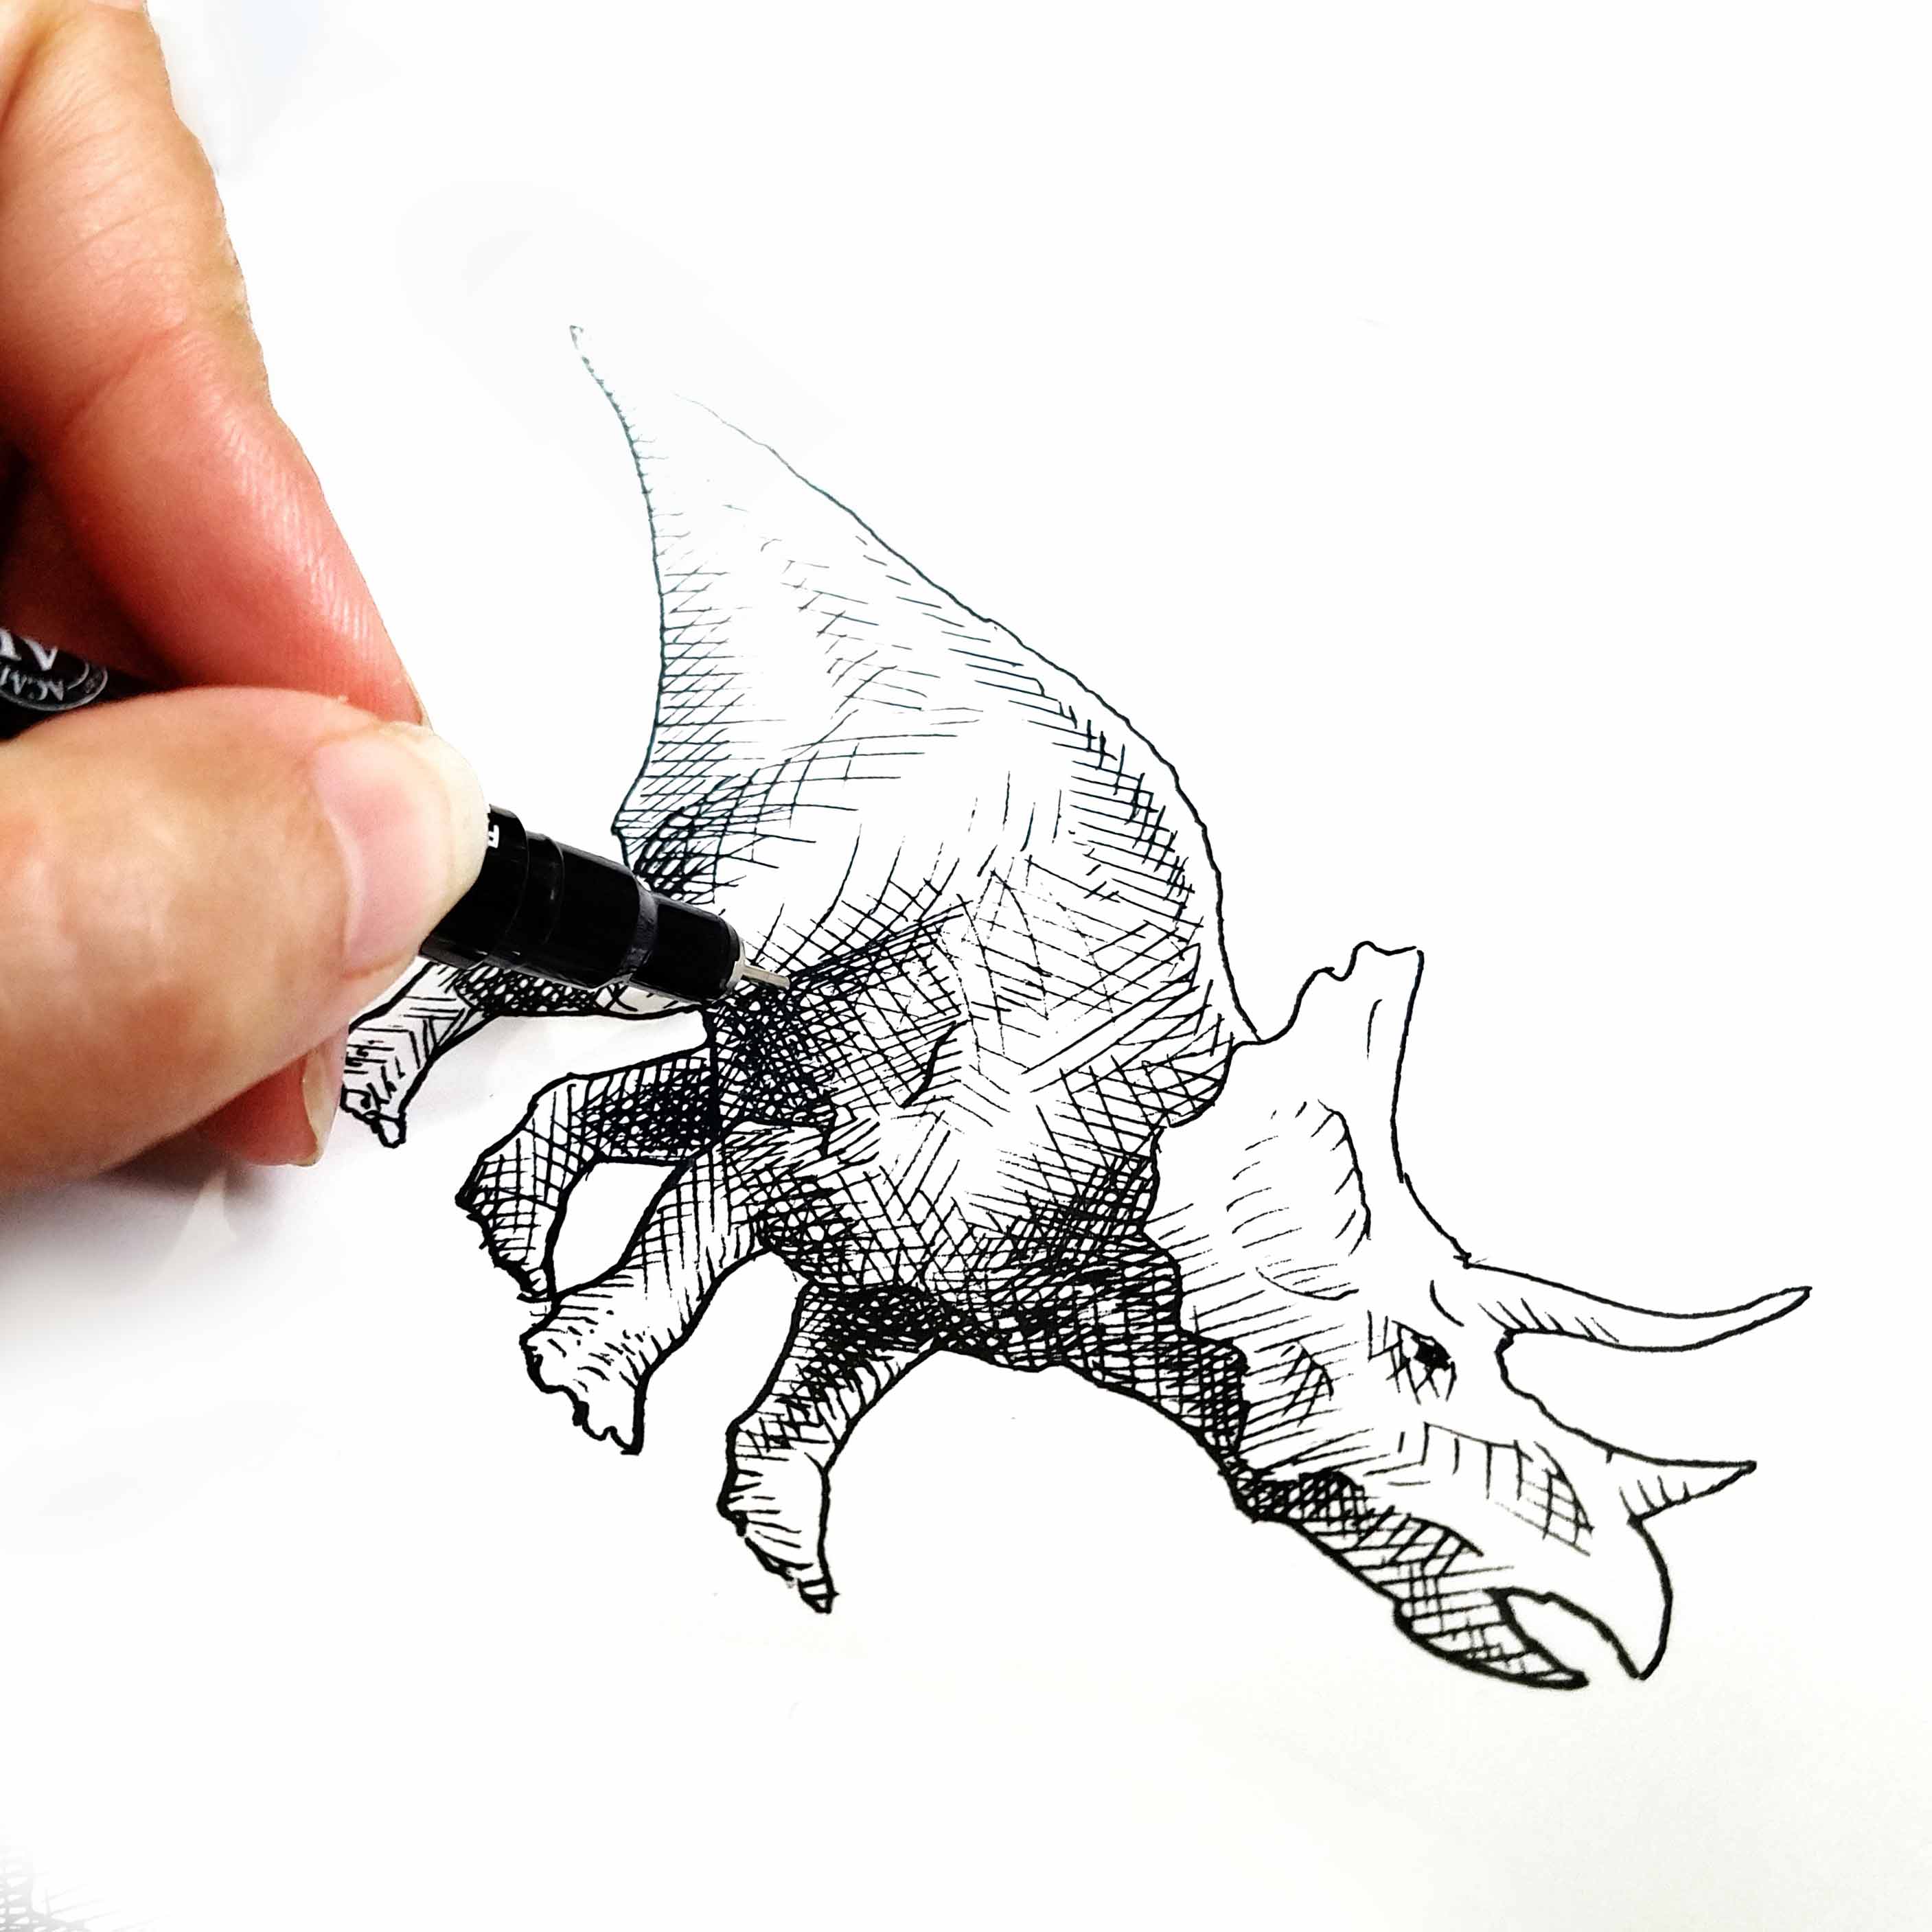 Triceratops wall art print of dinosaur drawing by artist Karen Whitworth